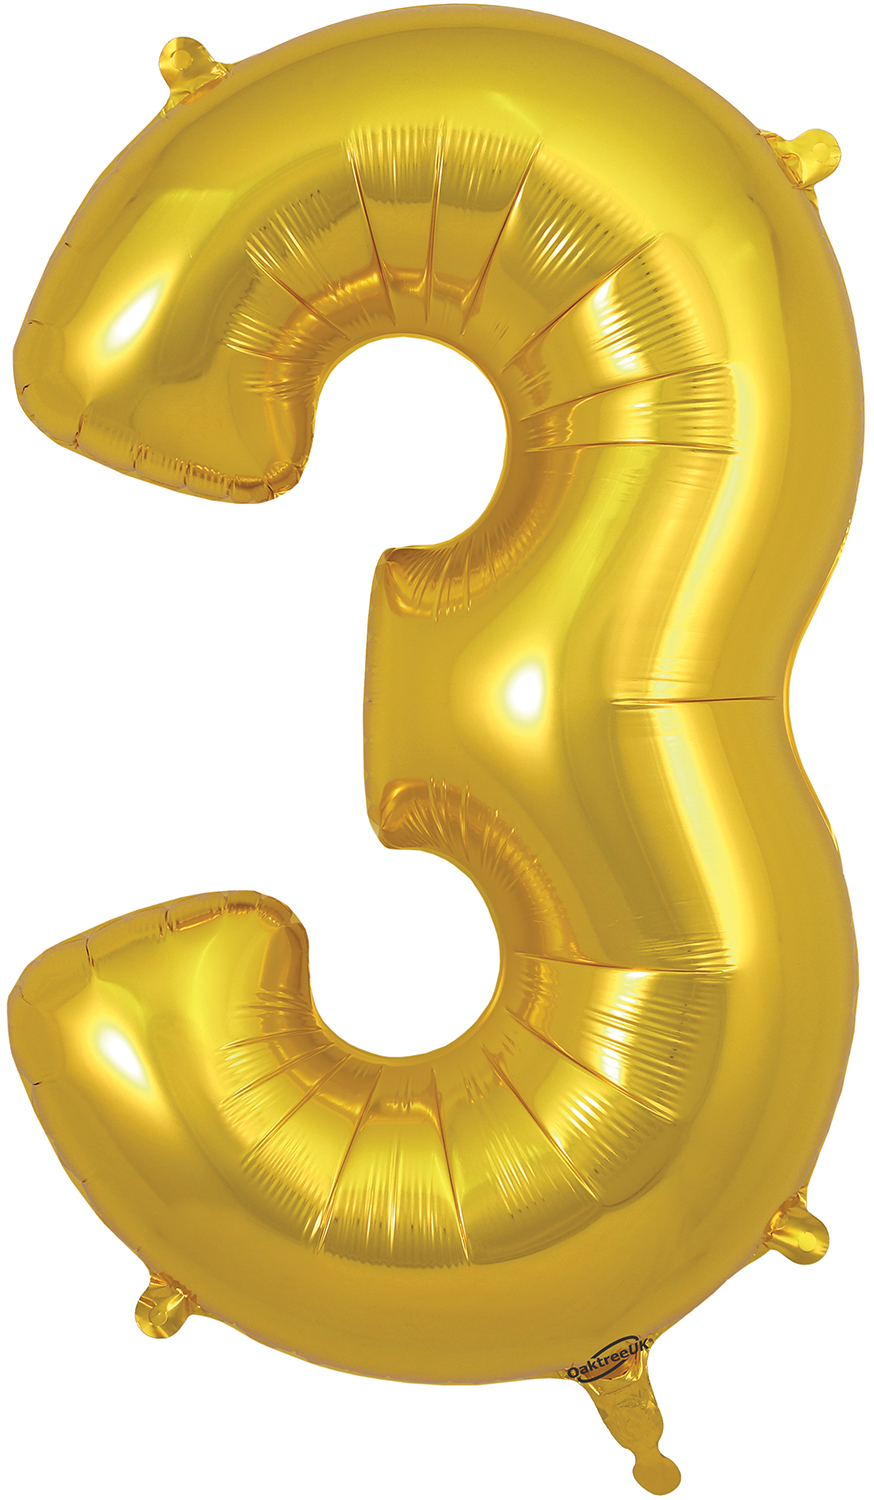 34" Number 3 Gold Oaktree Foil Balloon